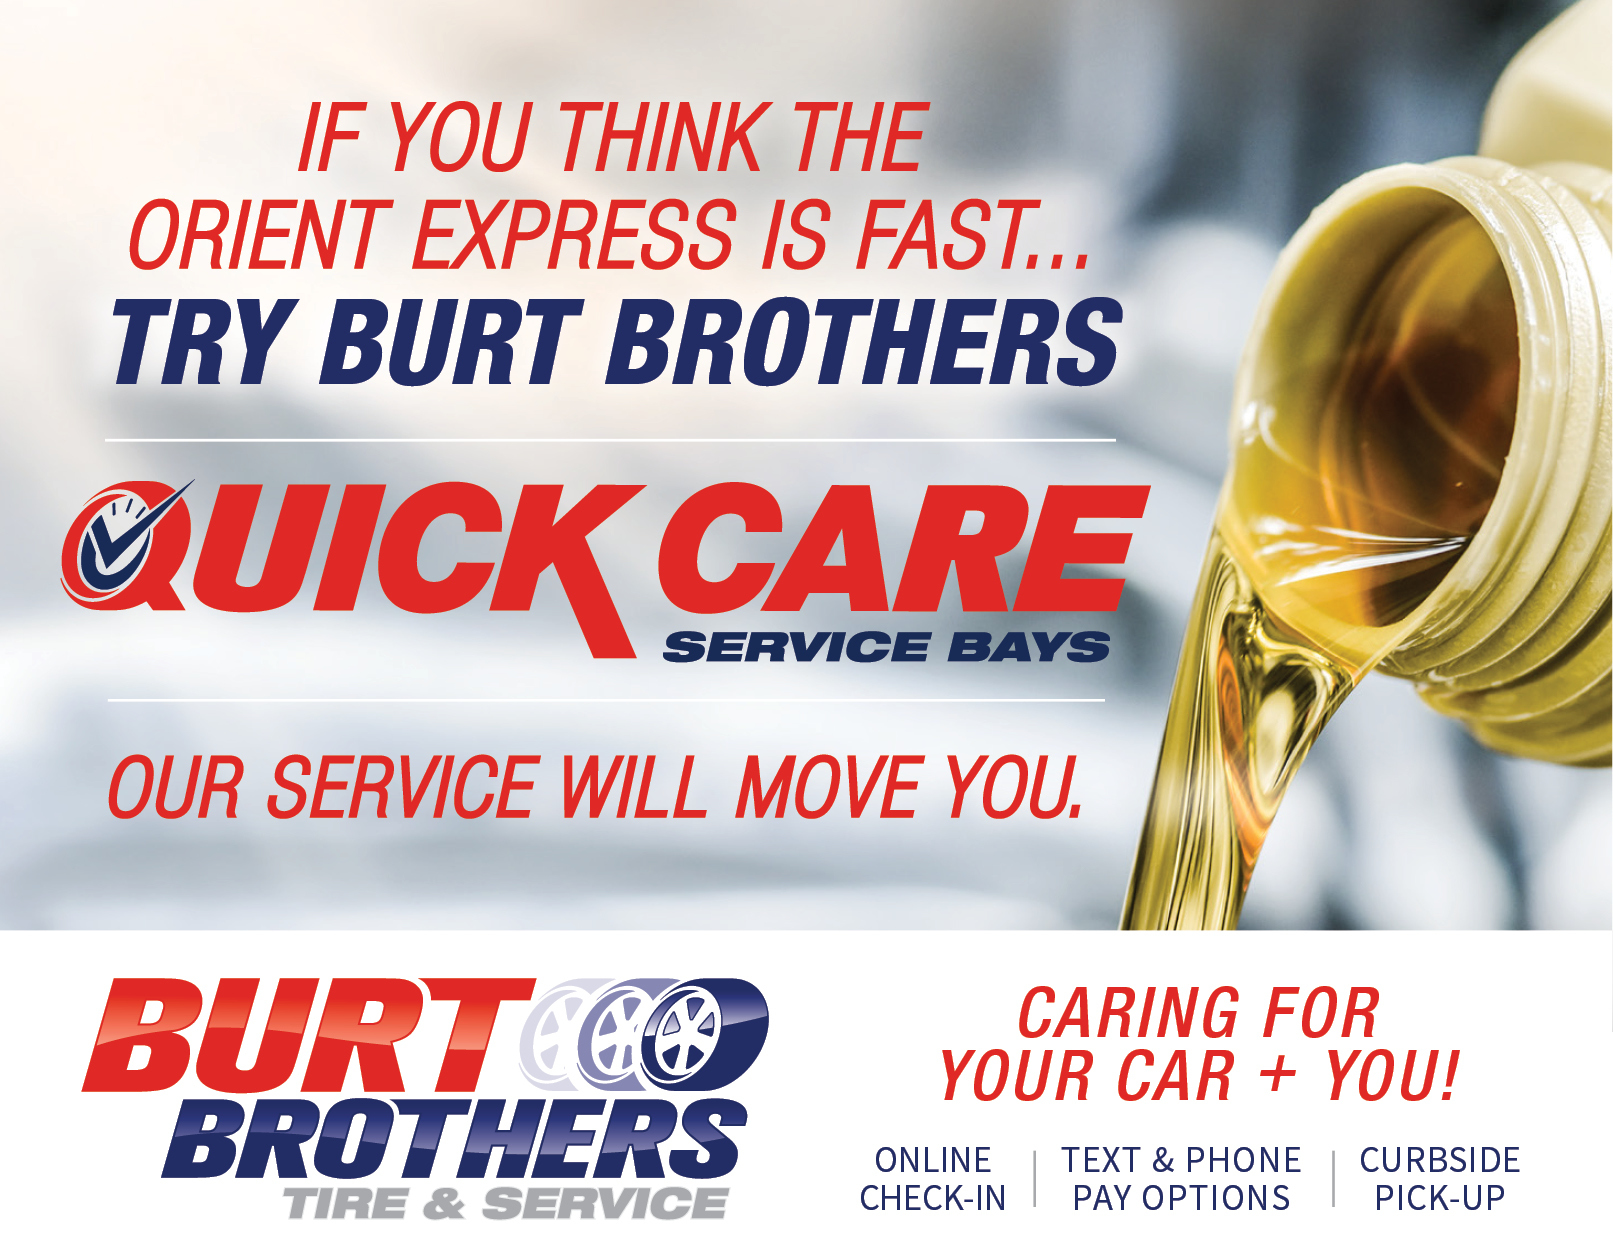 Ad Burt Brothers Murder Express